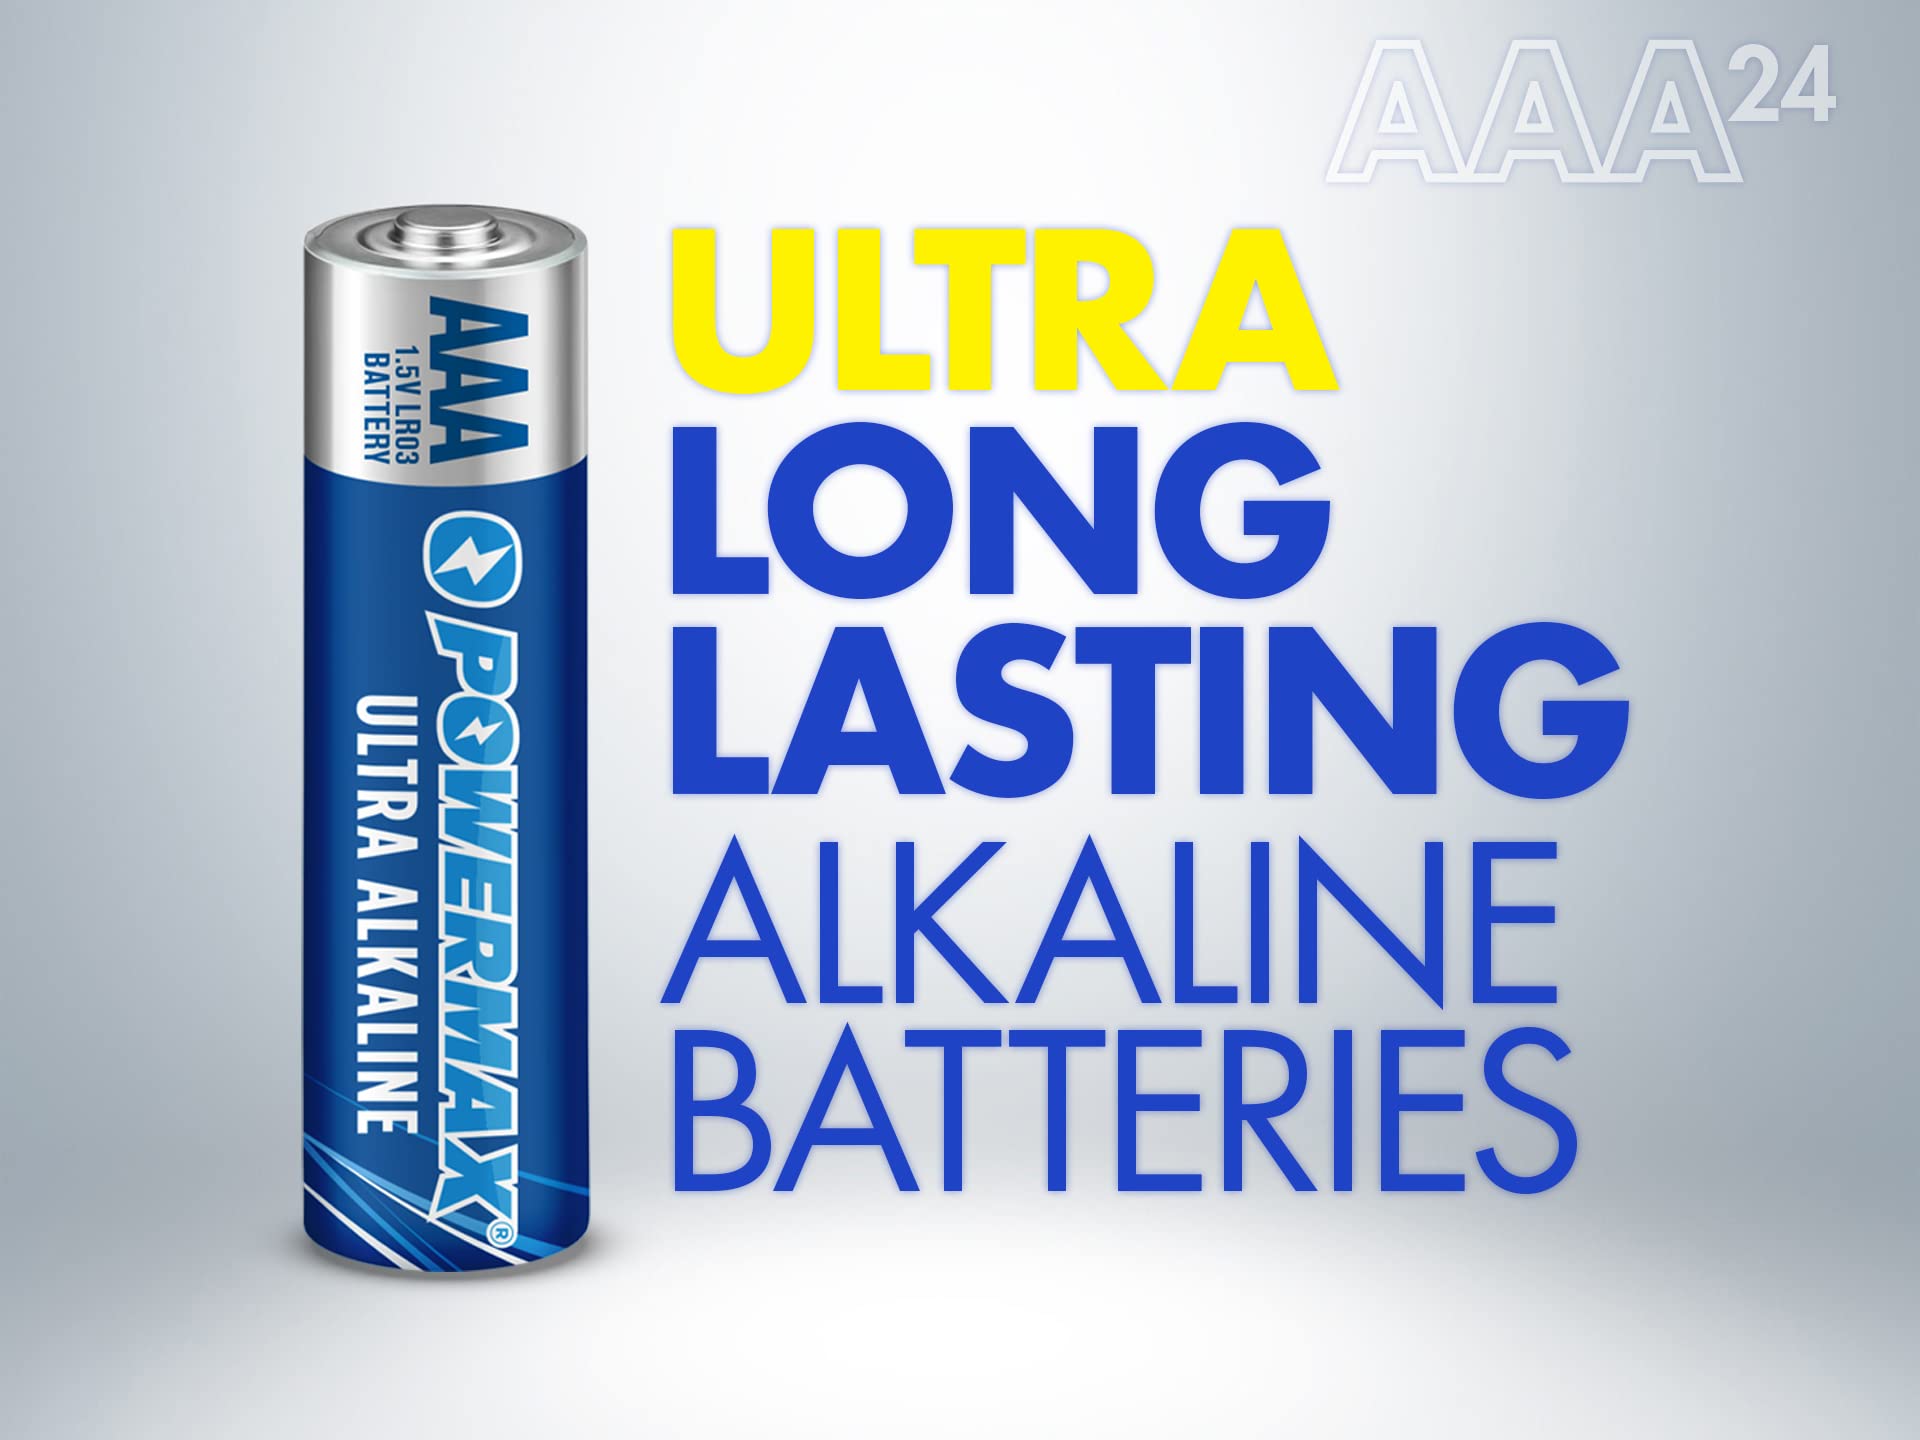 Powermax 24-Count AAA Batteries, Ultra Long Lasting Alkaline Battery, 10-Year Shelf Life, Reclosable Packaging